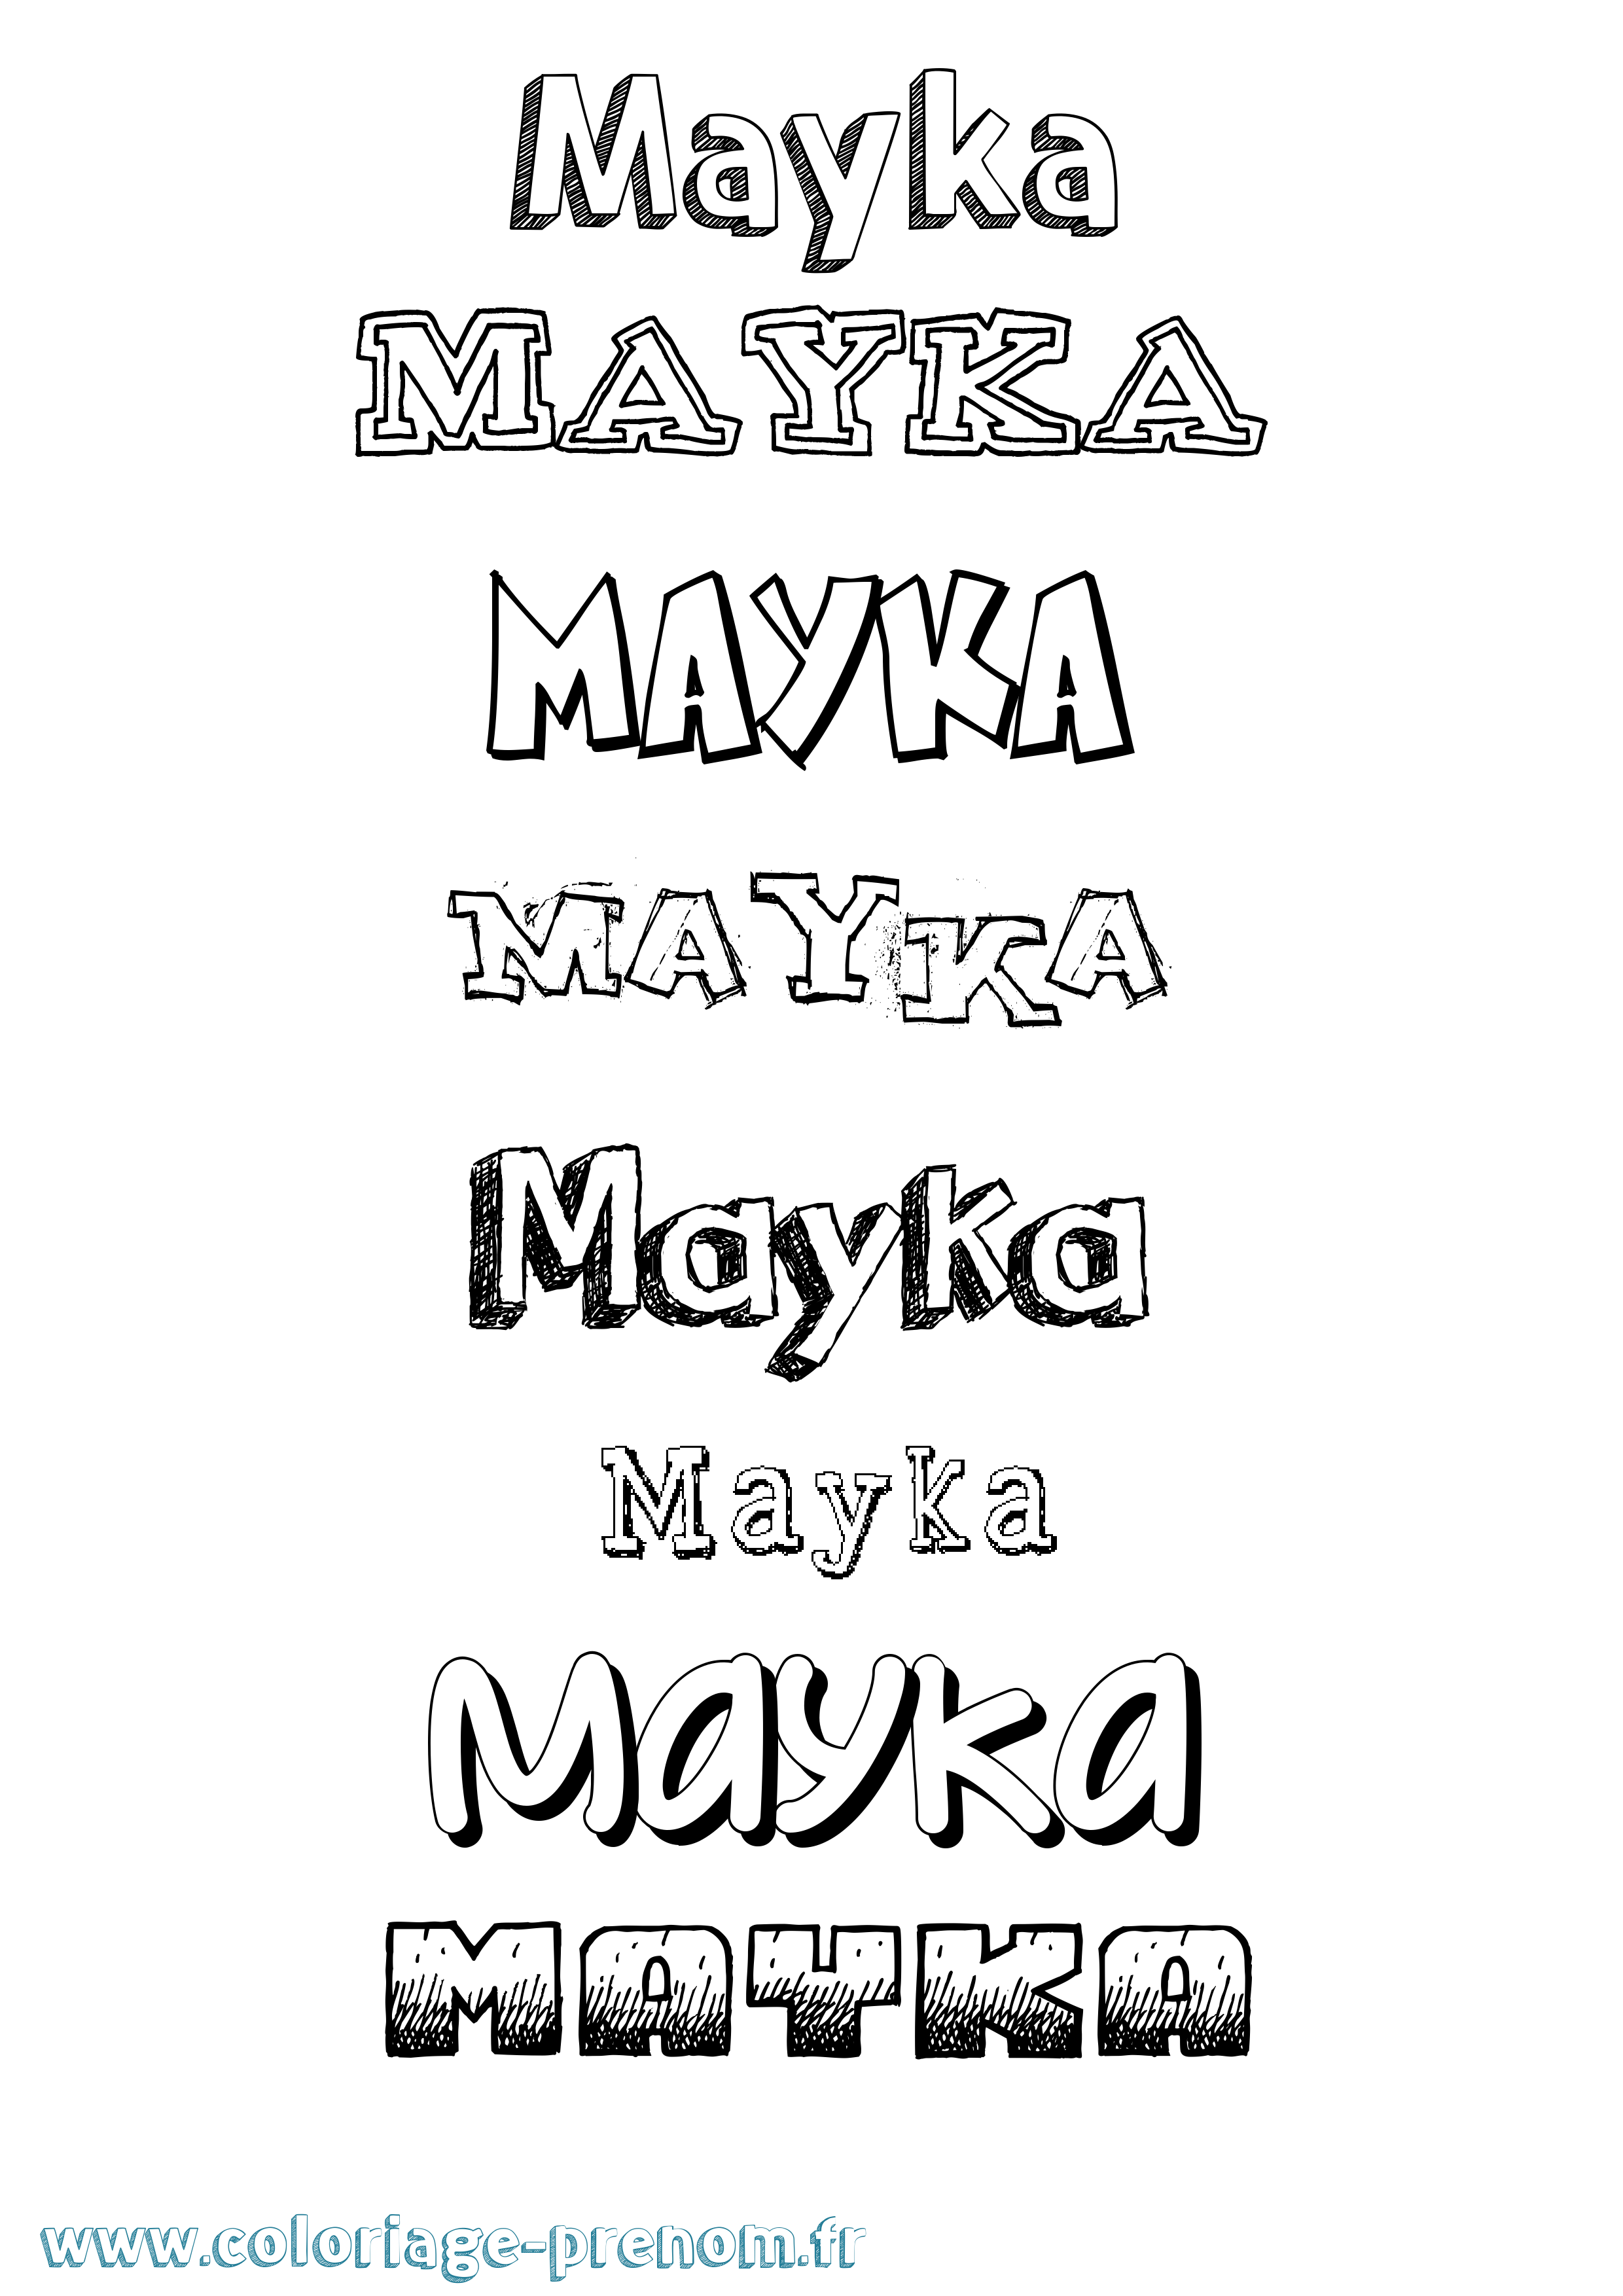 Coloriage prénom Mayka Dessiné